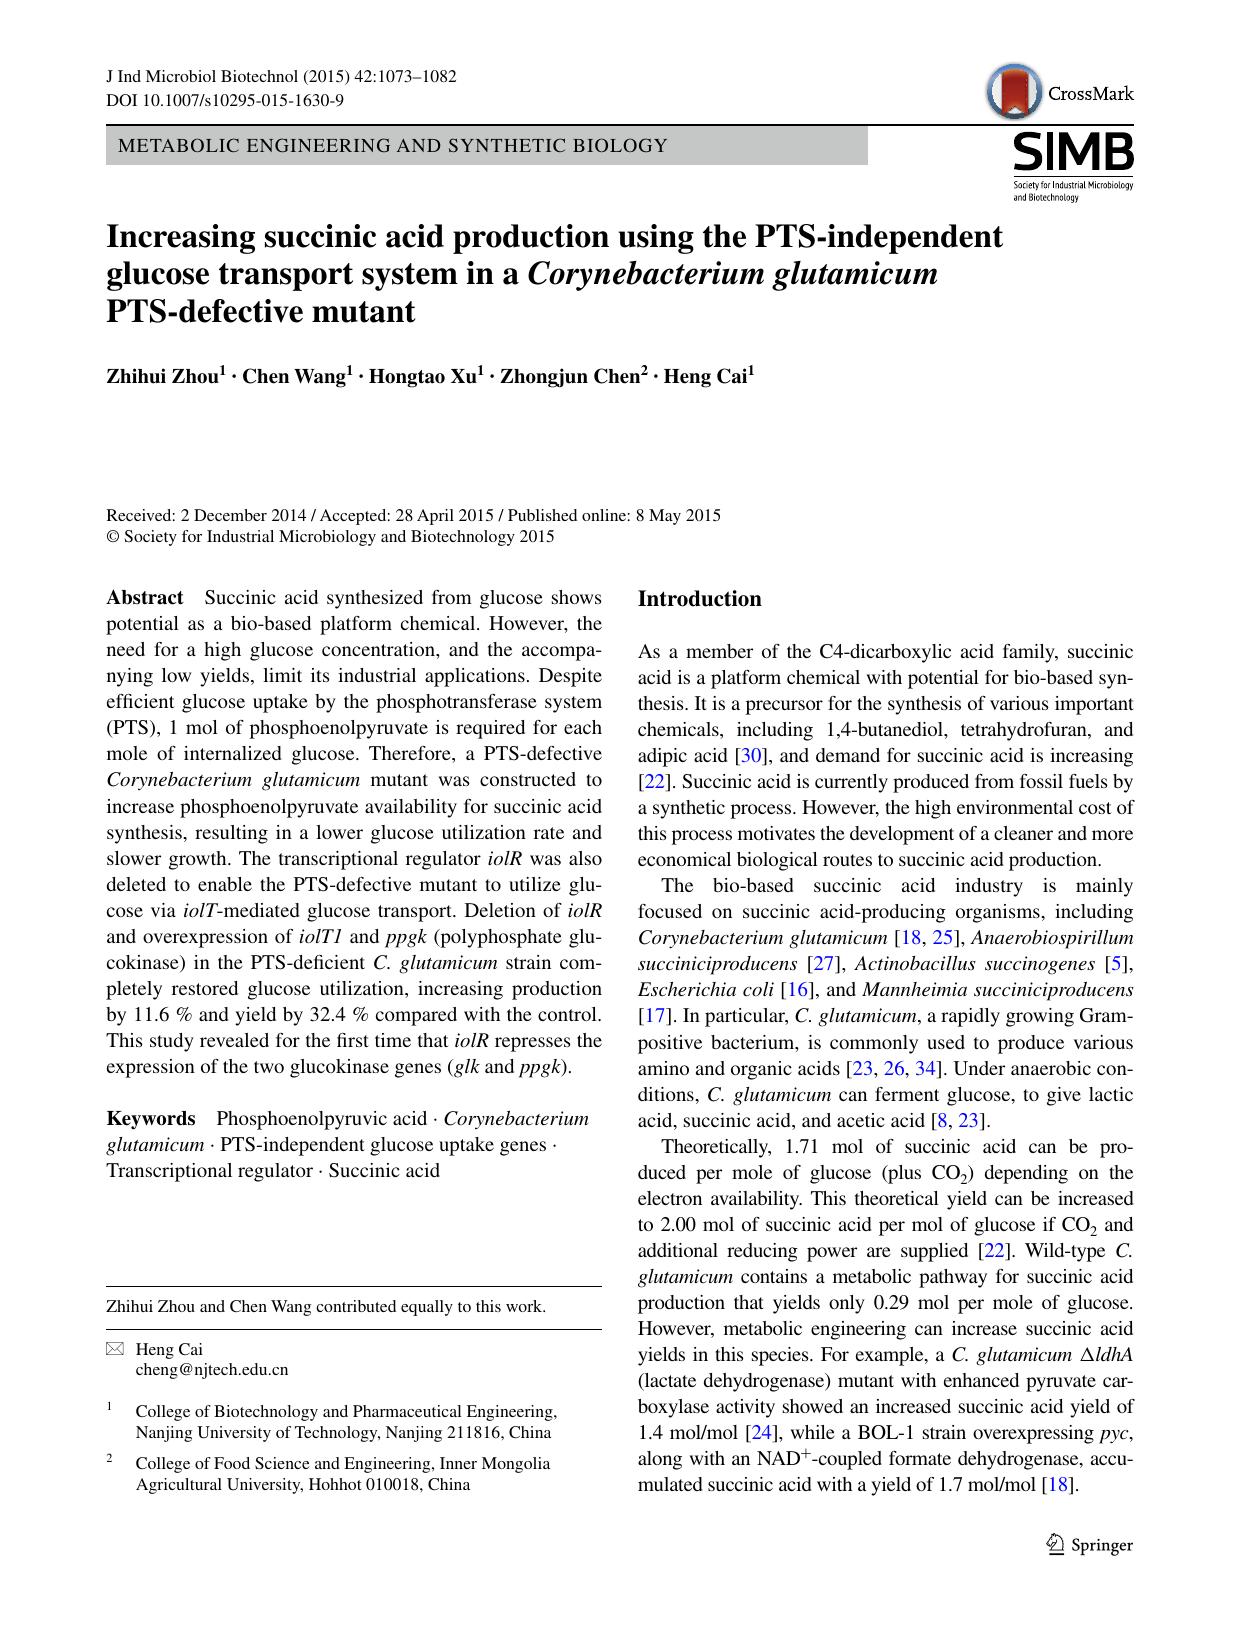 Increasing succinic acid production using the PTS-independent glucose transport system in a Corynebacterium glutamicum PTS-defective mutant by Zhihui Zhou & Chen Wang & Hongtao Xu & Zhongjun Chen & Heng Cai